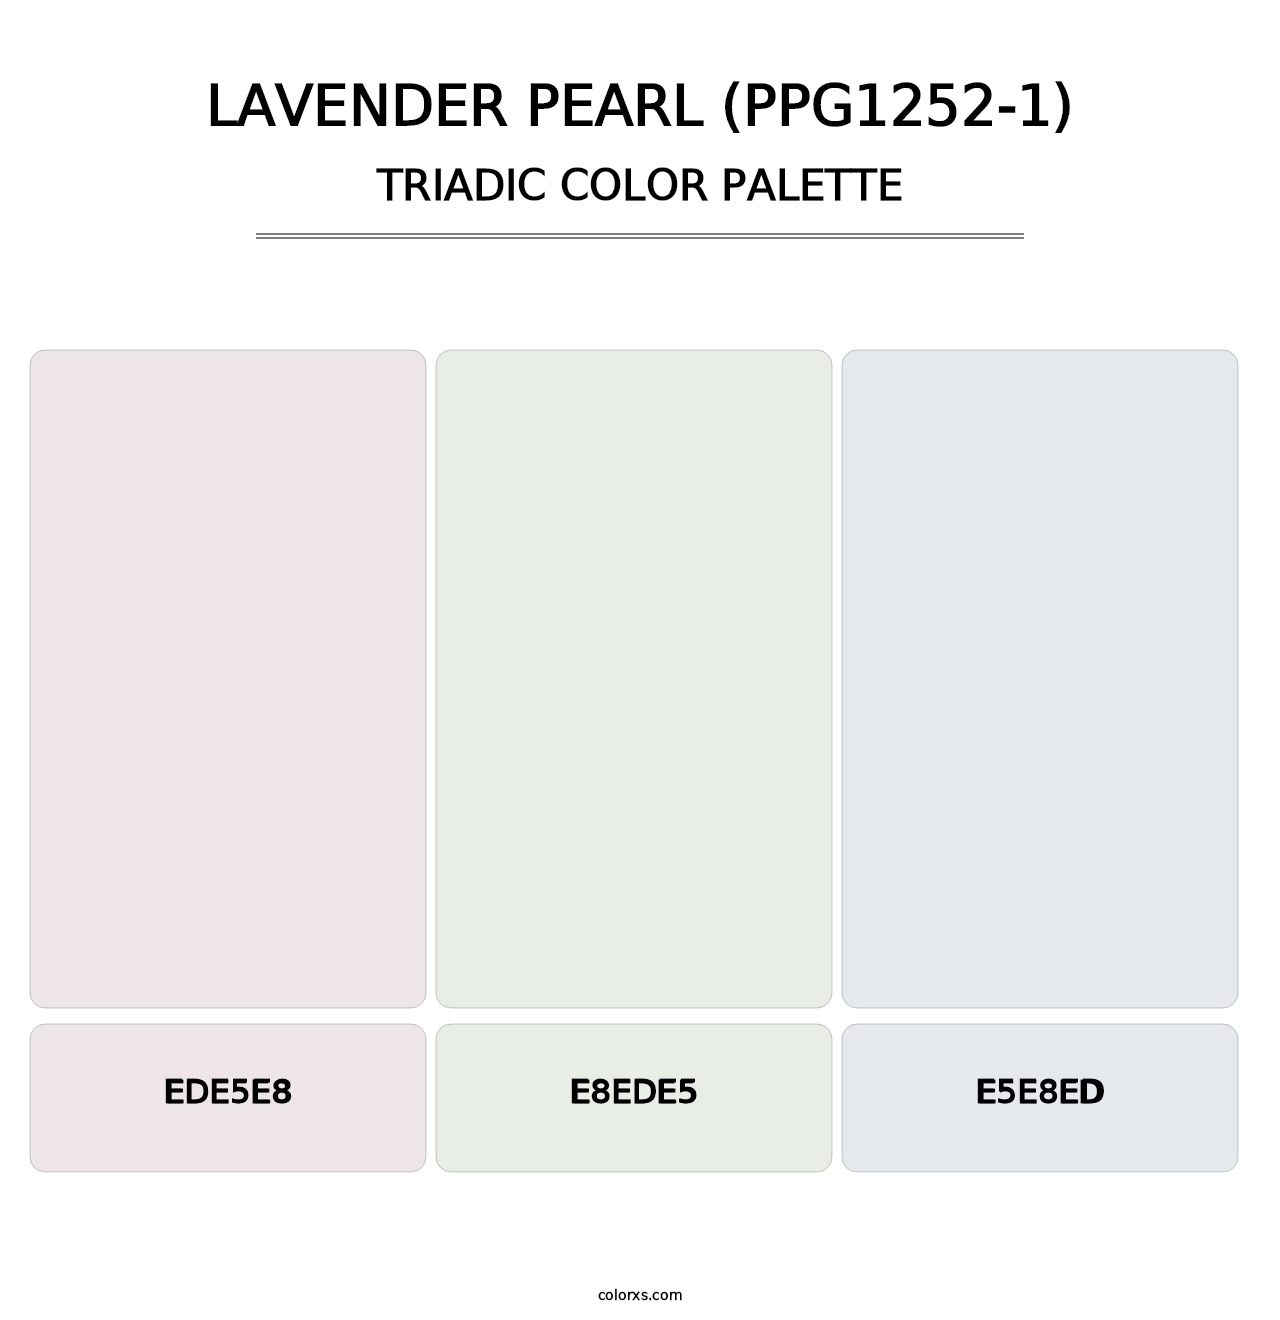 Lavender Pearl (PPG1252-1) - Triadic Color Palette